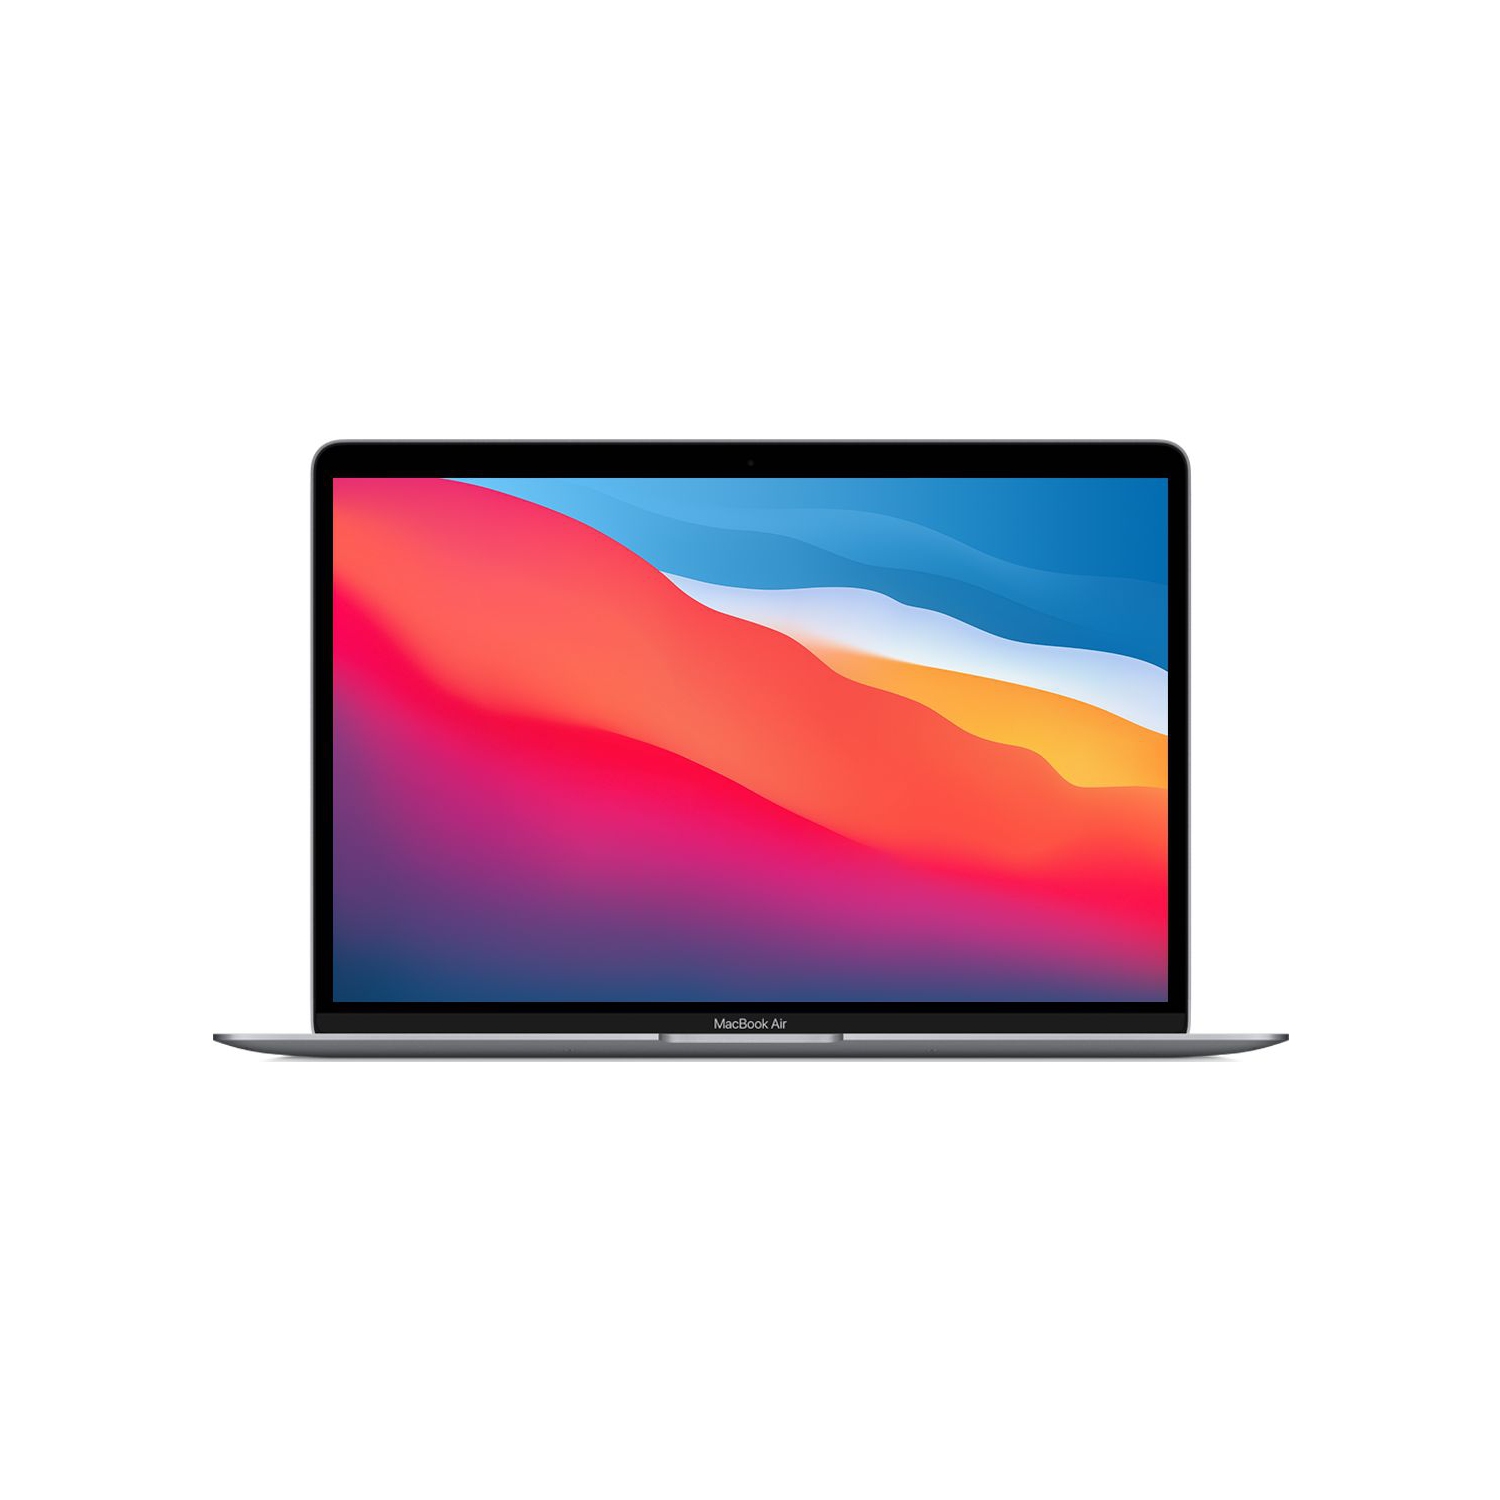 Apple MacBook Air 13.3" w/ Touch ID (Fall 2020) - Space Grey (Apple M1 Chip / 256GB SSD / 8GB RAM) - En - OPEN BOX